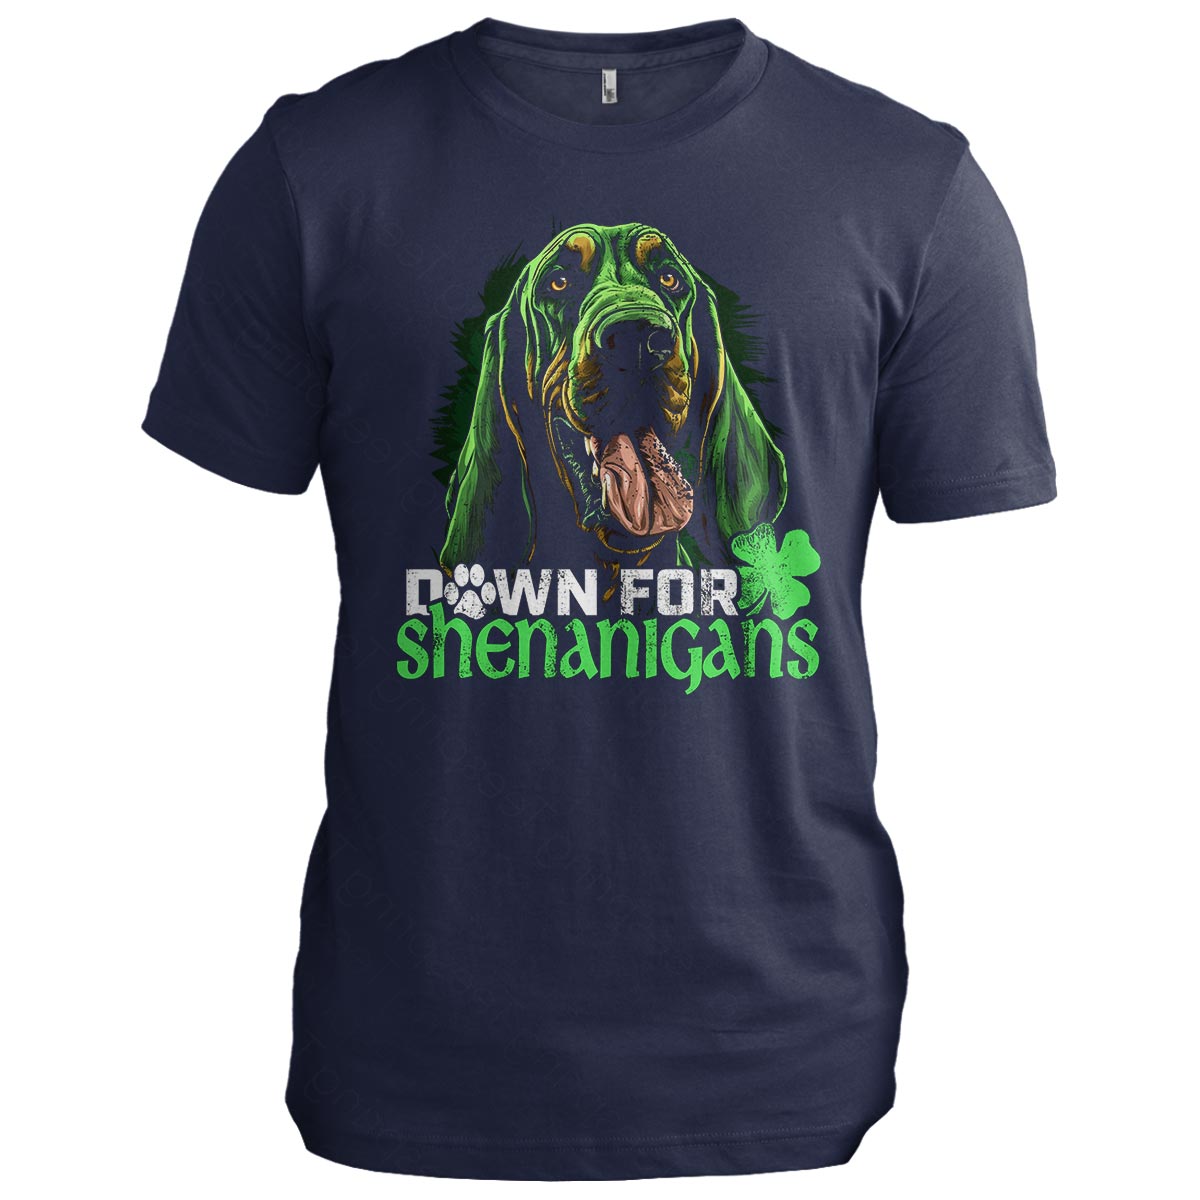 Down for Shenanigans: Bloodhound